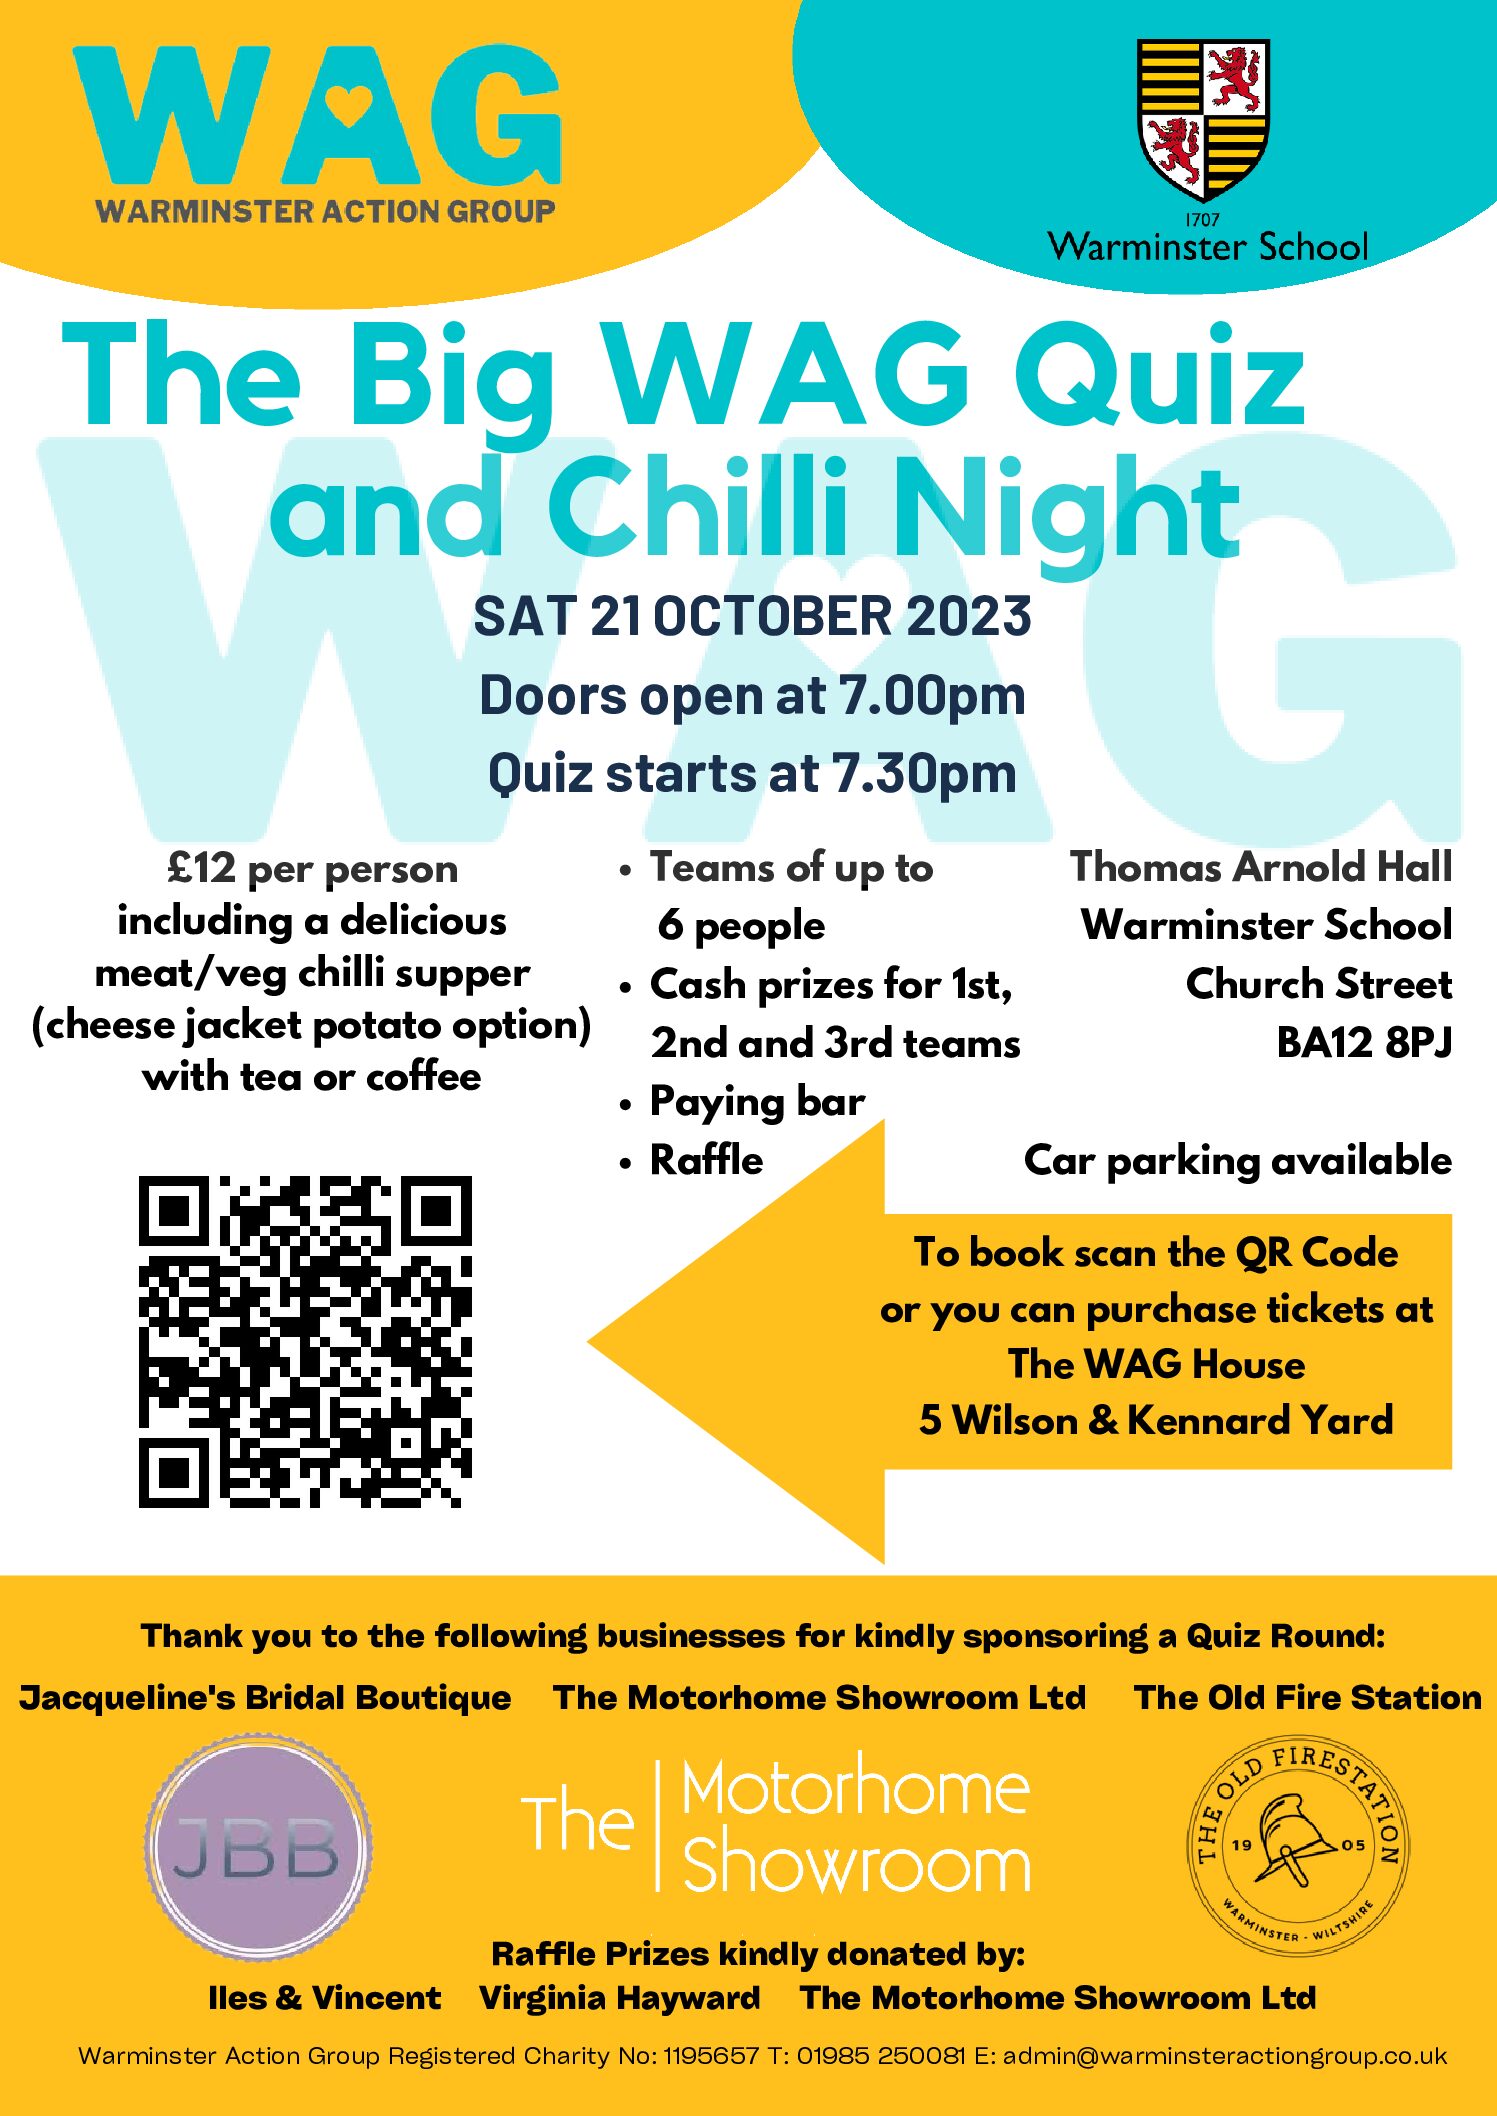 The Big WAG Quiz and Chilli Night